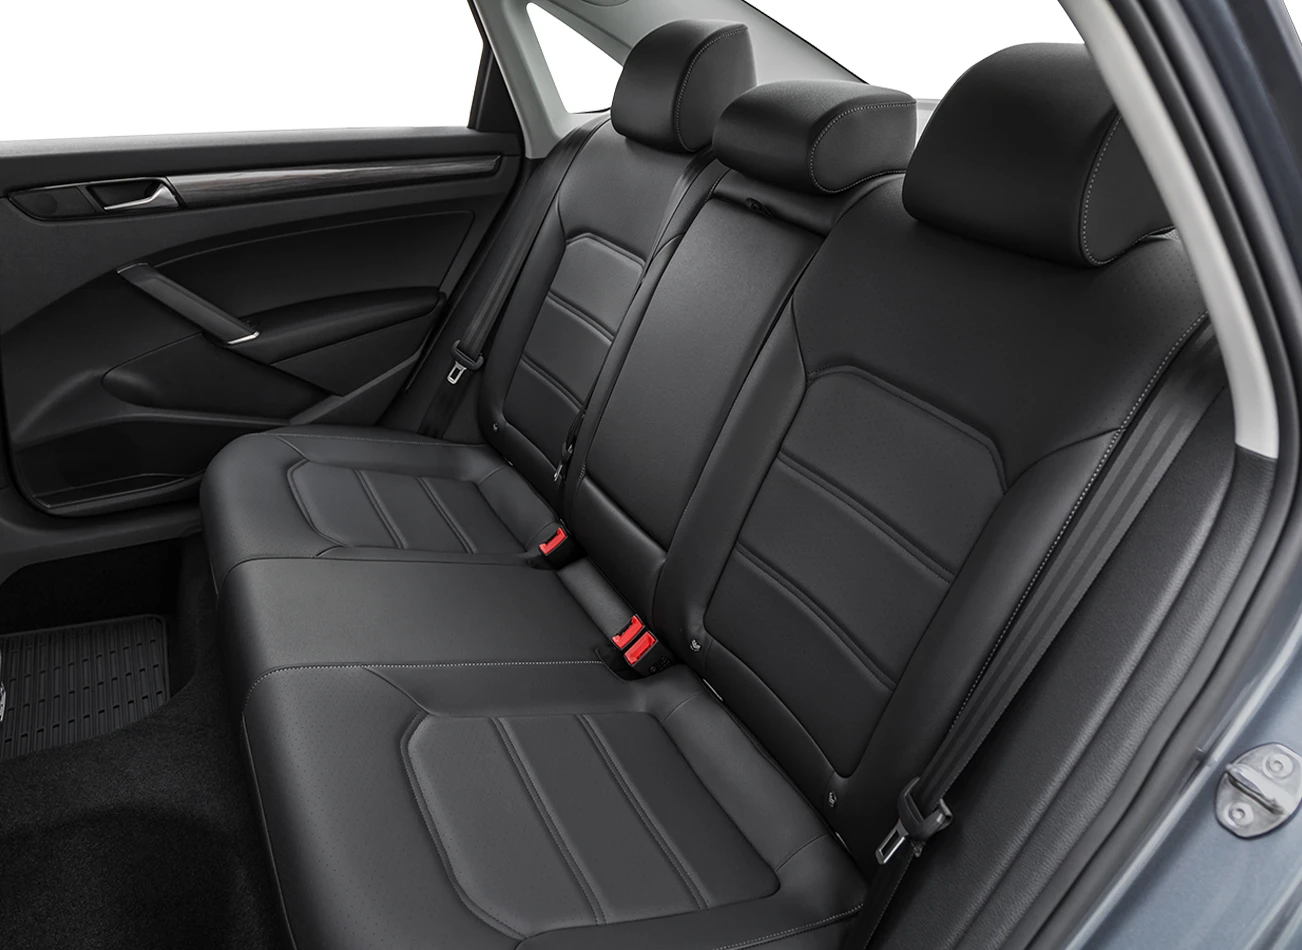 2020 Volkswagen Passat Review: Spacious back passenger seats | CarMax